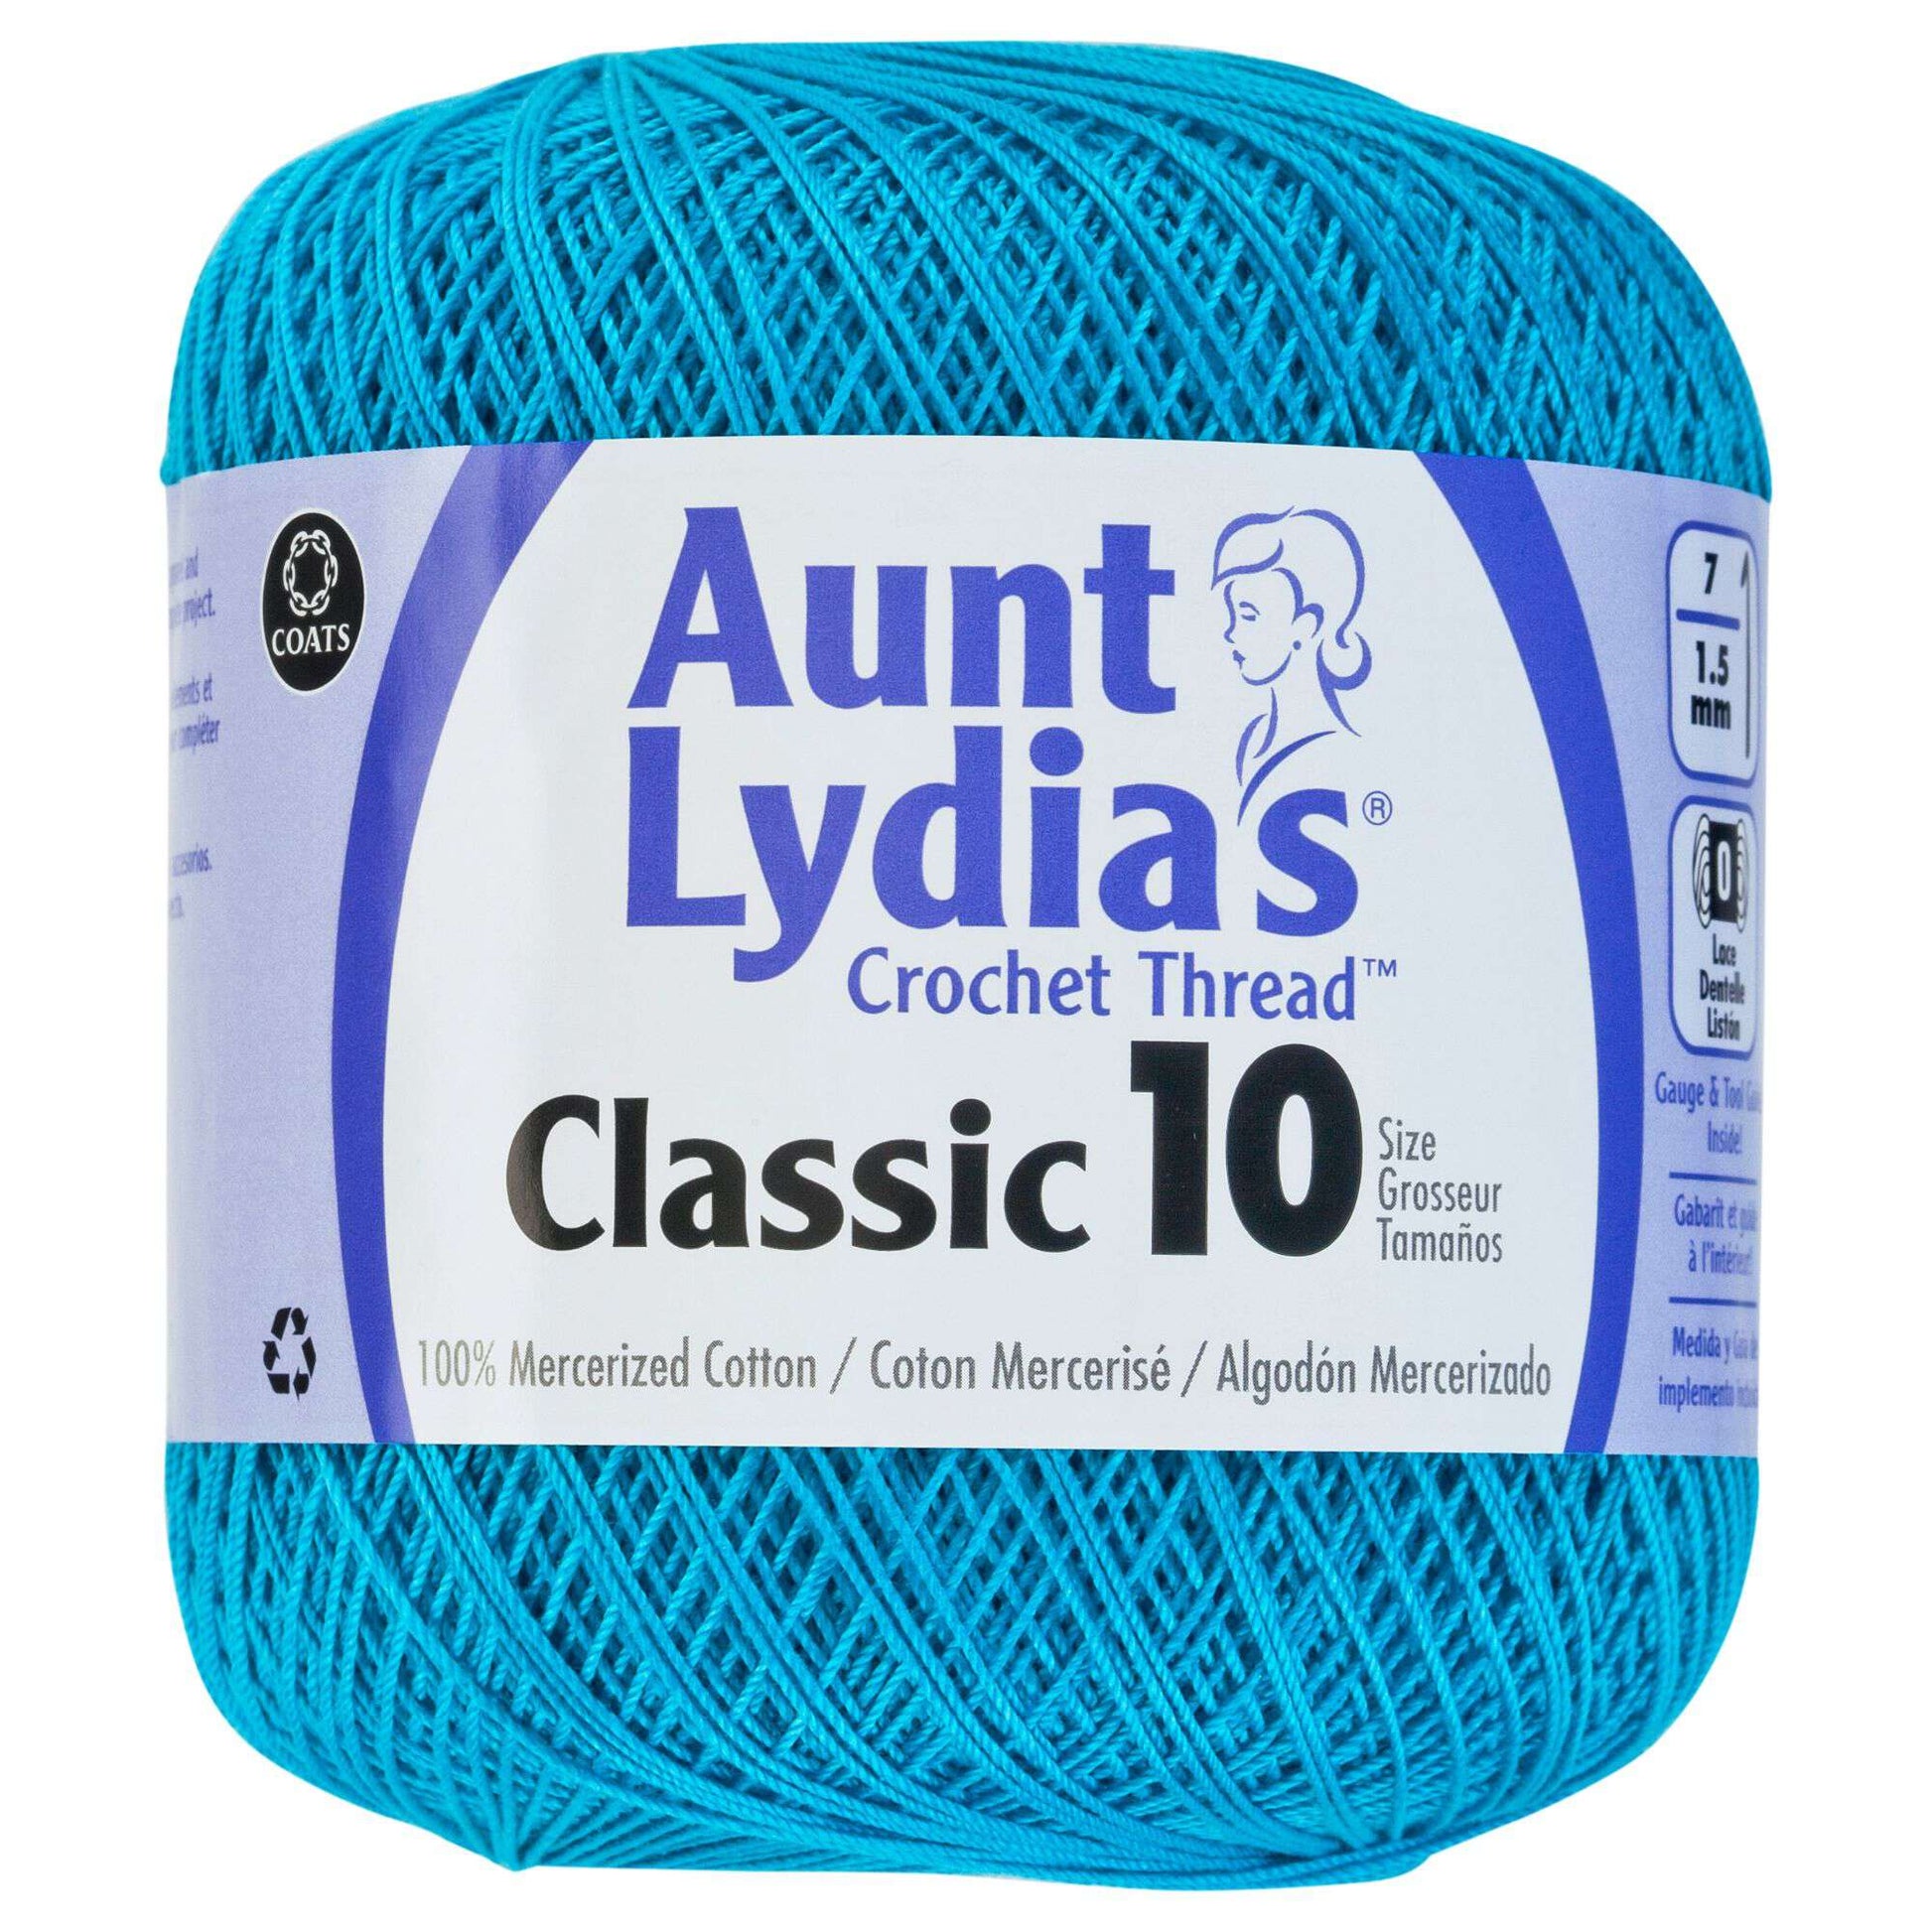 Aunt Lydia's Classic Crochet Thread Size 10 - Clearance shades Parakeet